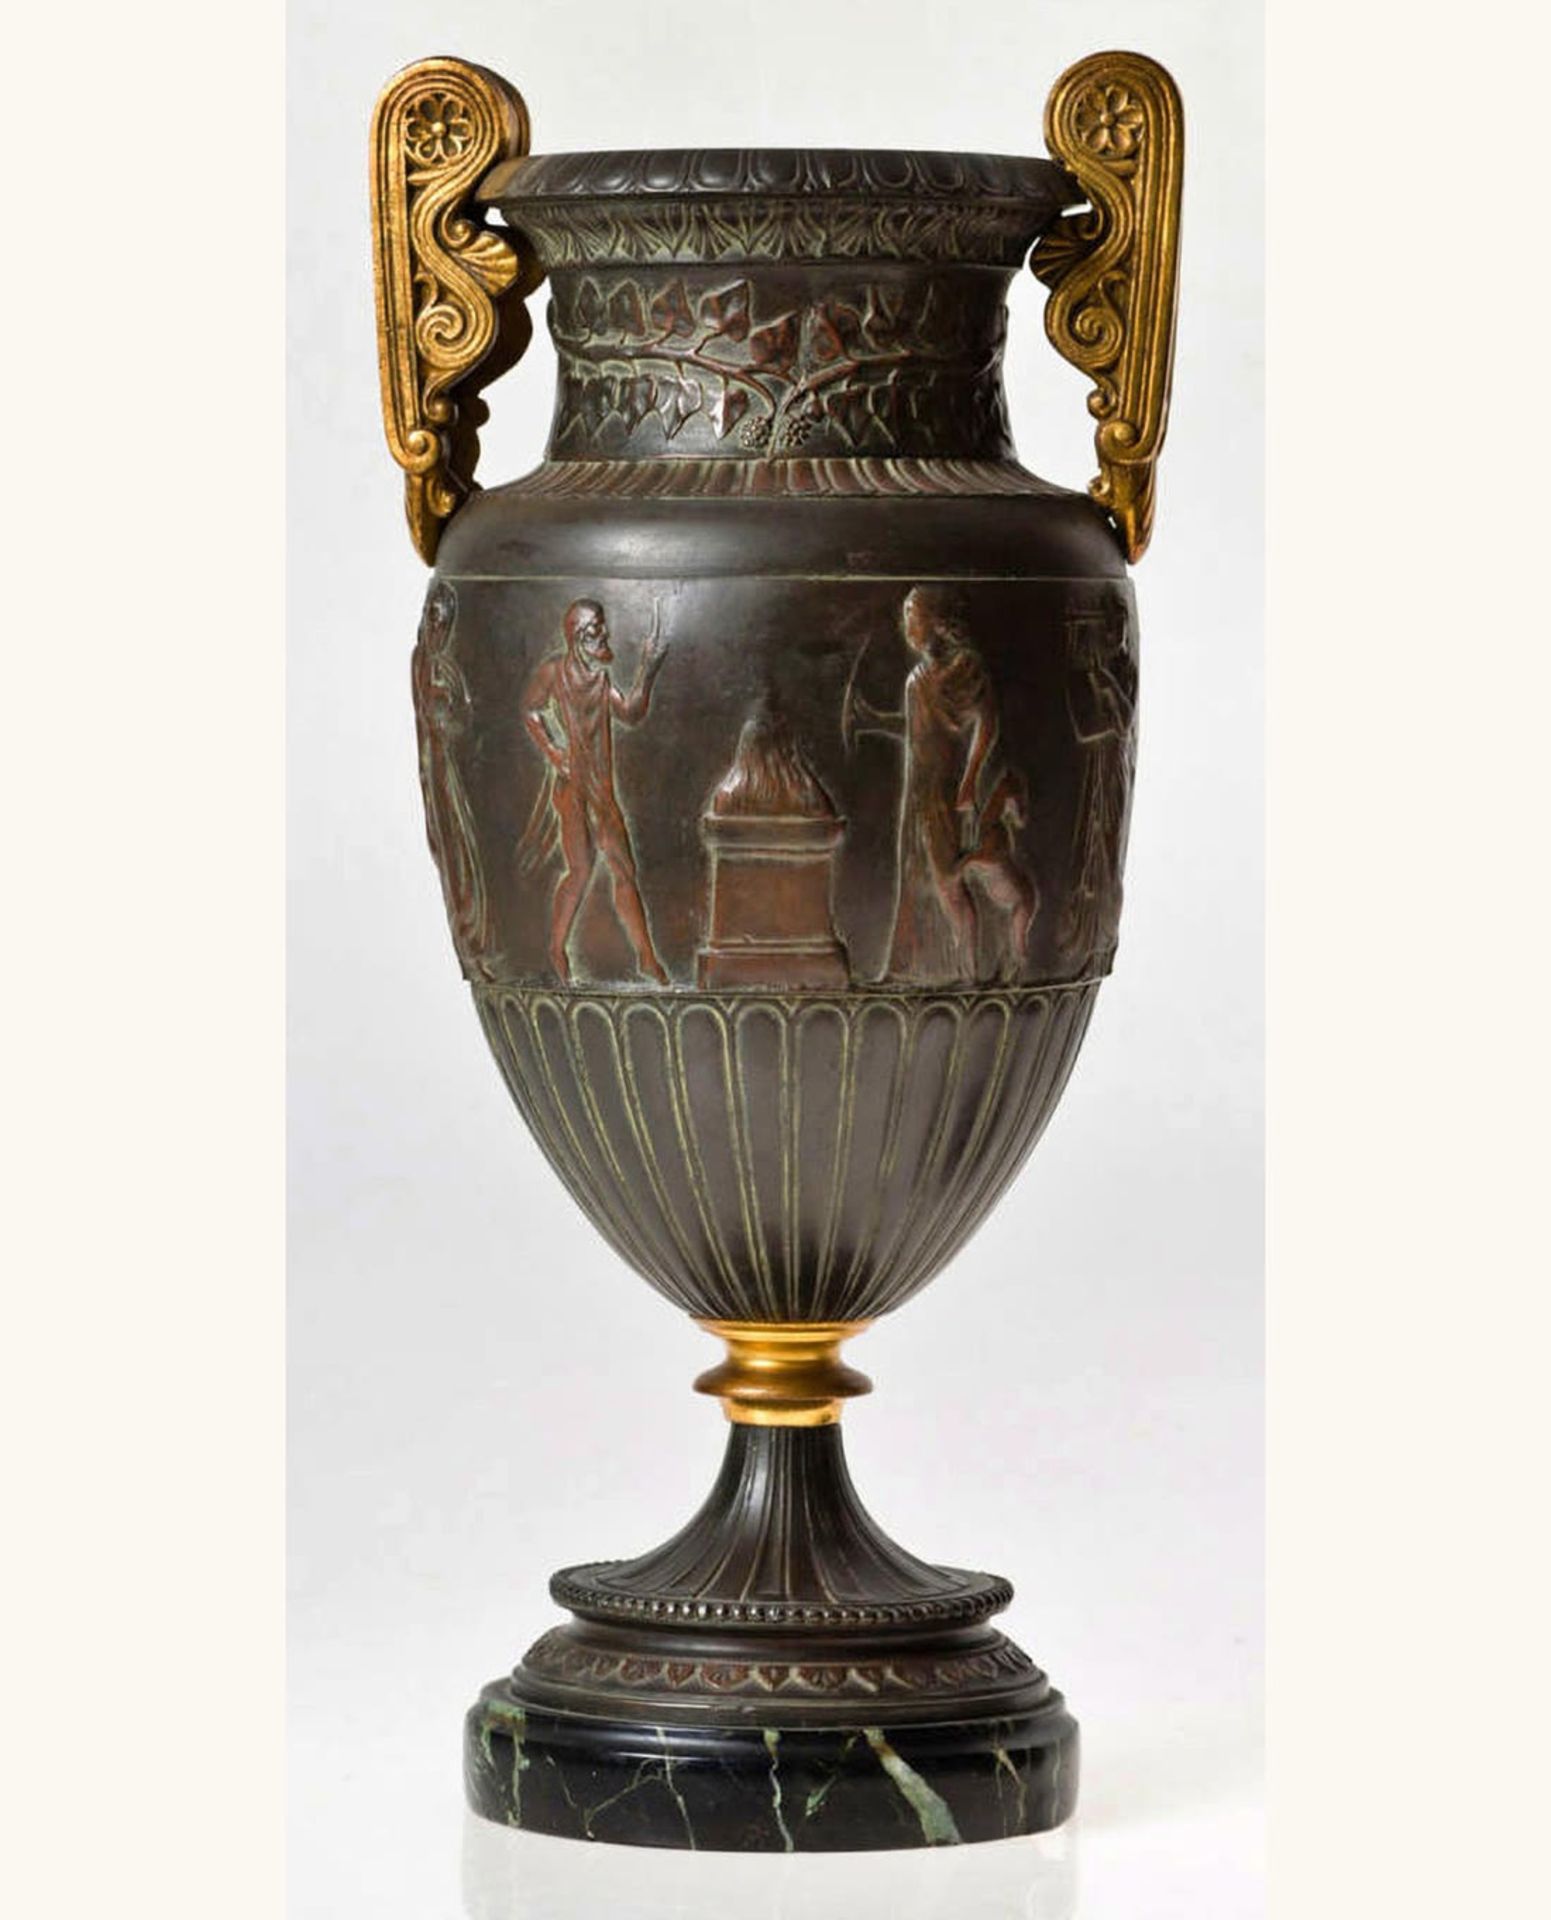 Pair of French Napoleon III Vases, 19th century - Image 2 of 3